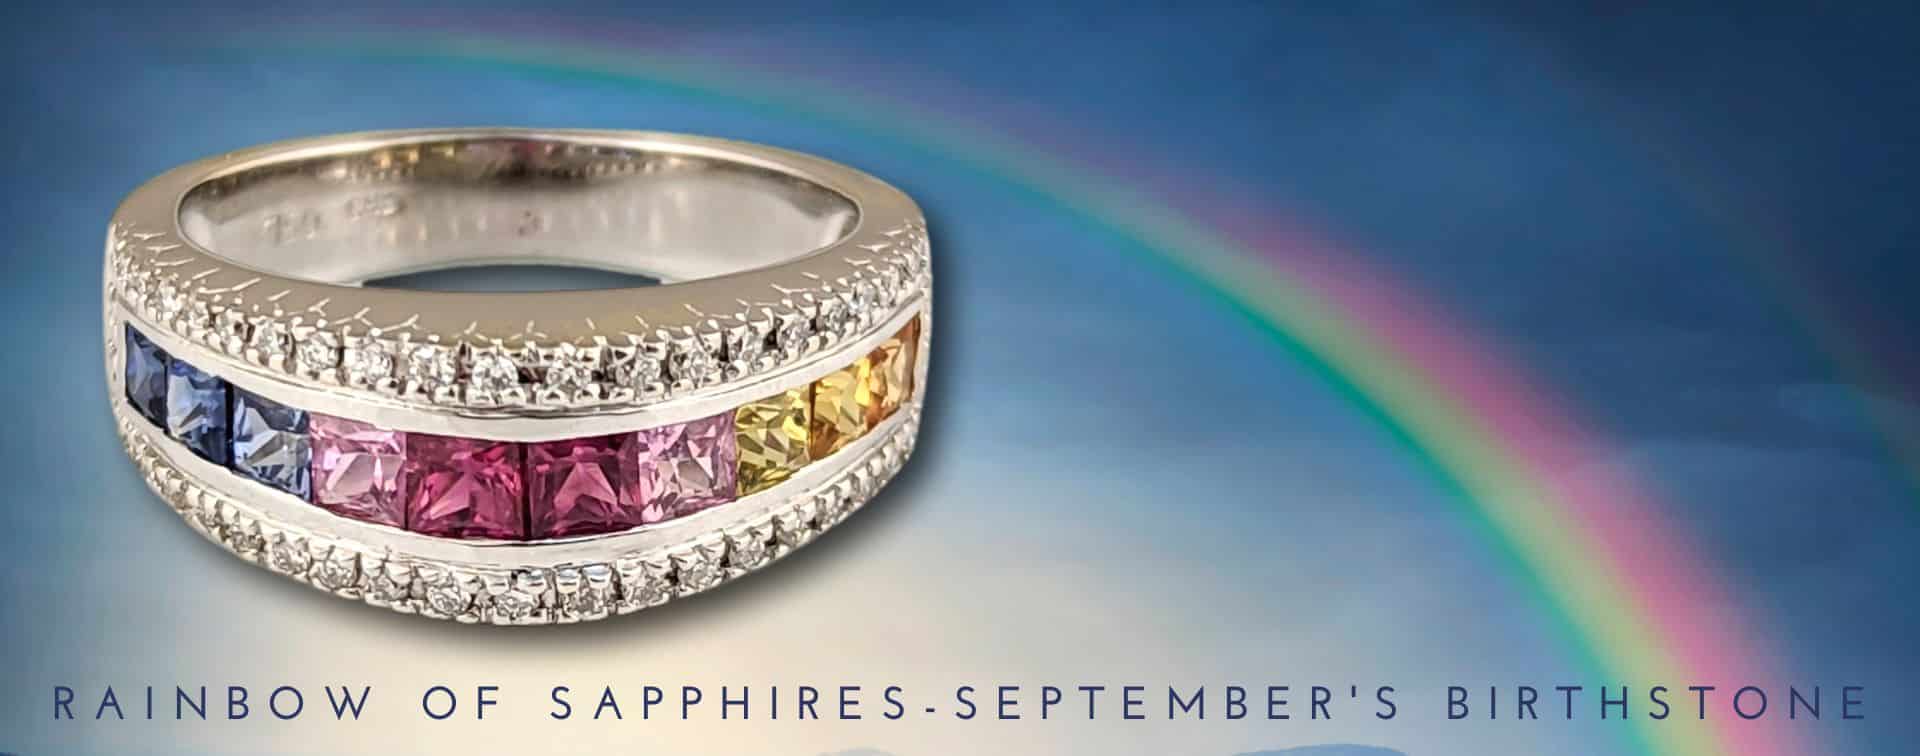 rainbow sapphire ring banner